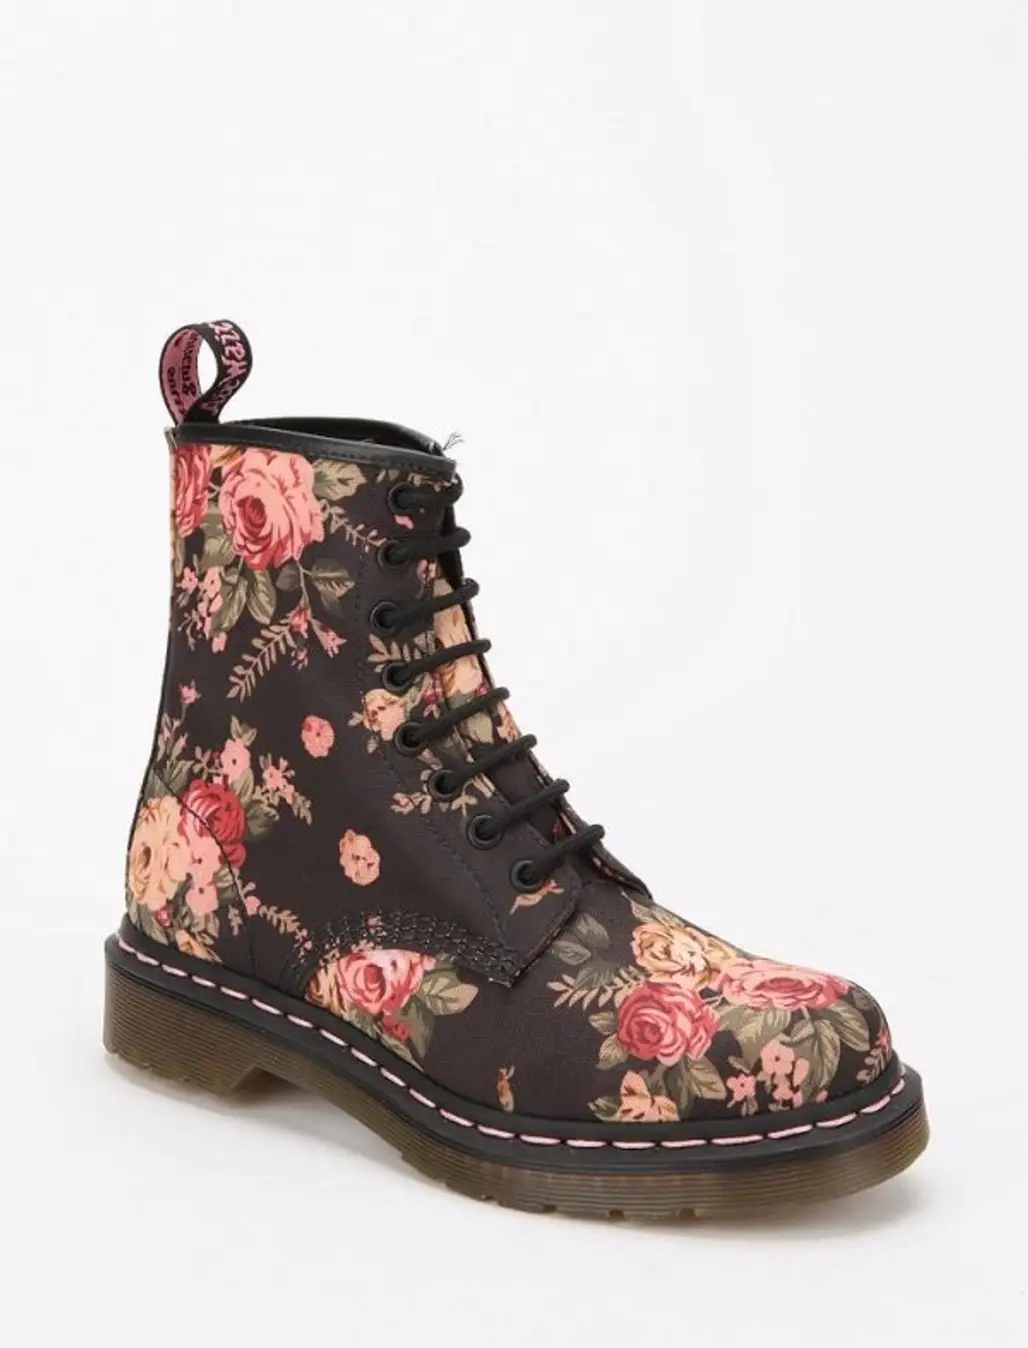 Classic Doc Marten Floral Boots